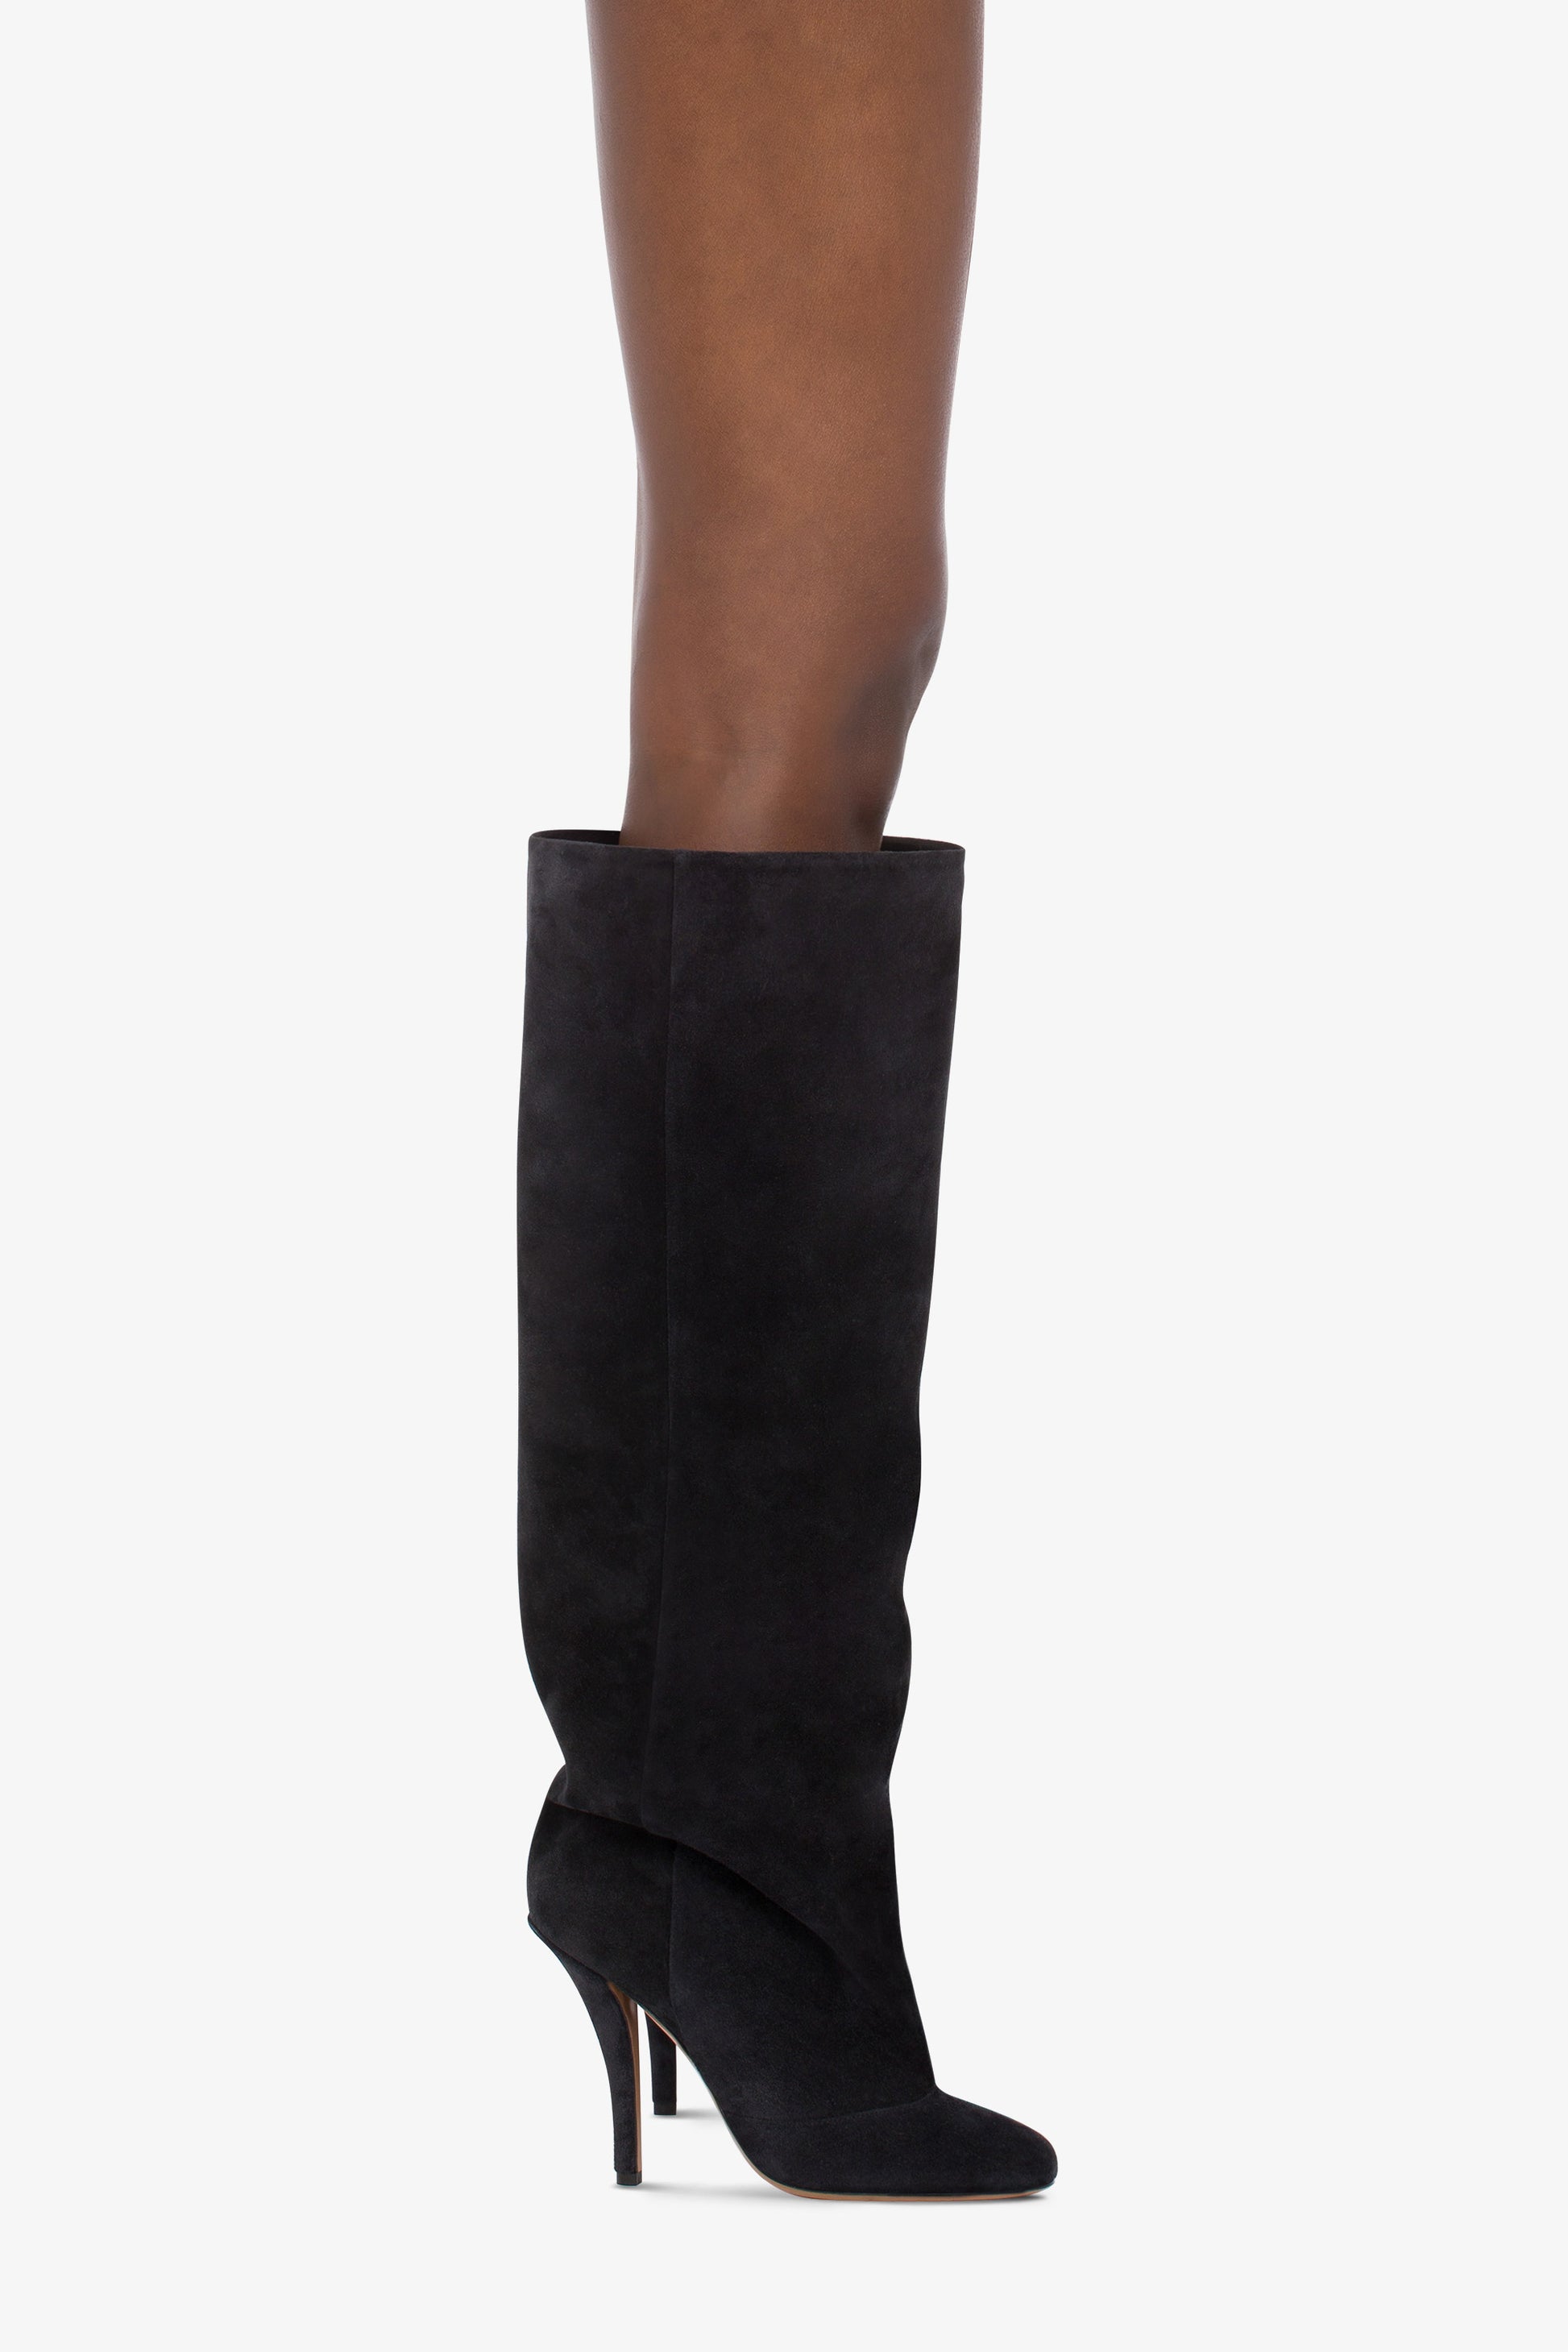 Knee-high boots in soft off-black suede leather - Produkt getragen